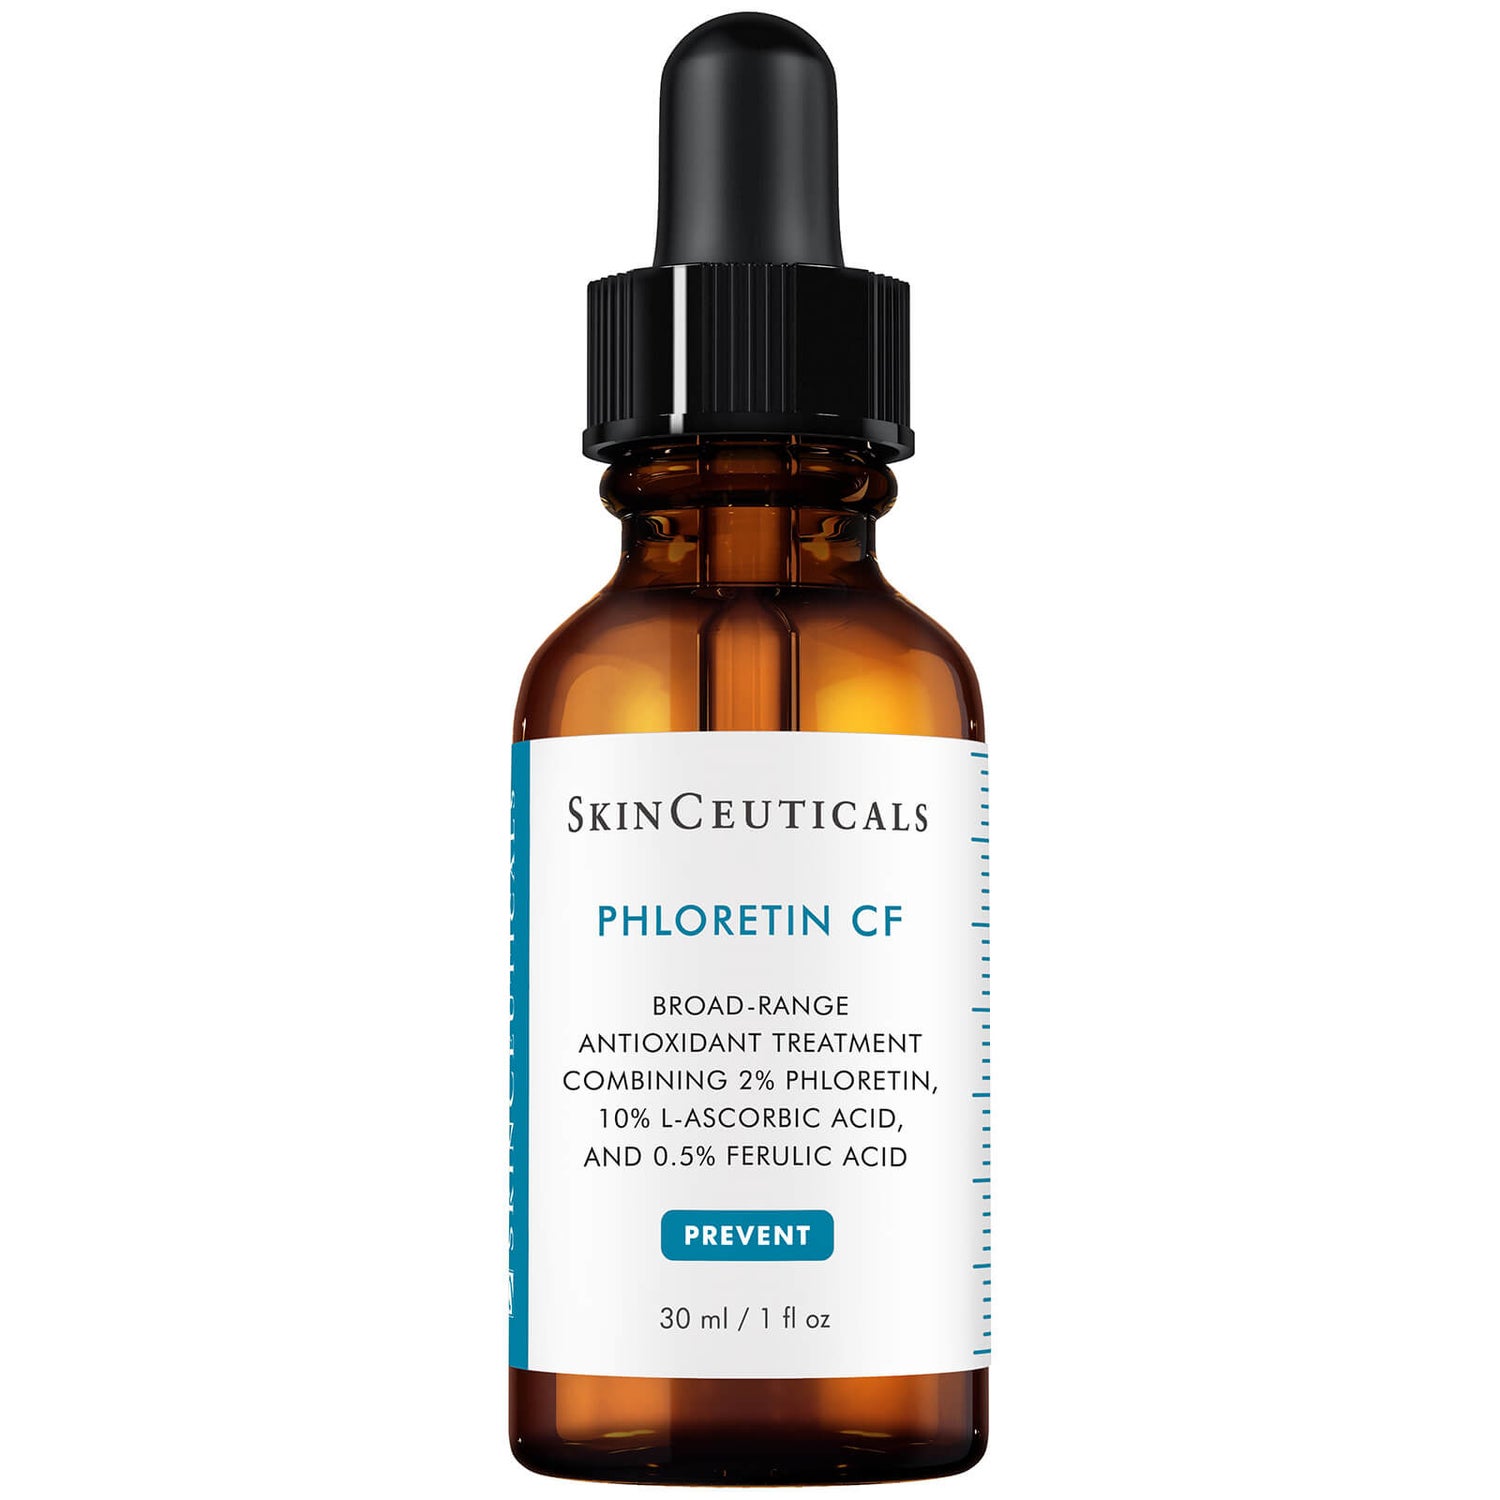 SkinCeuticals Phloretin CF Antioxidant Serum for Normal, Combination, Discolouration-Prone Skin Types